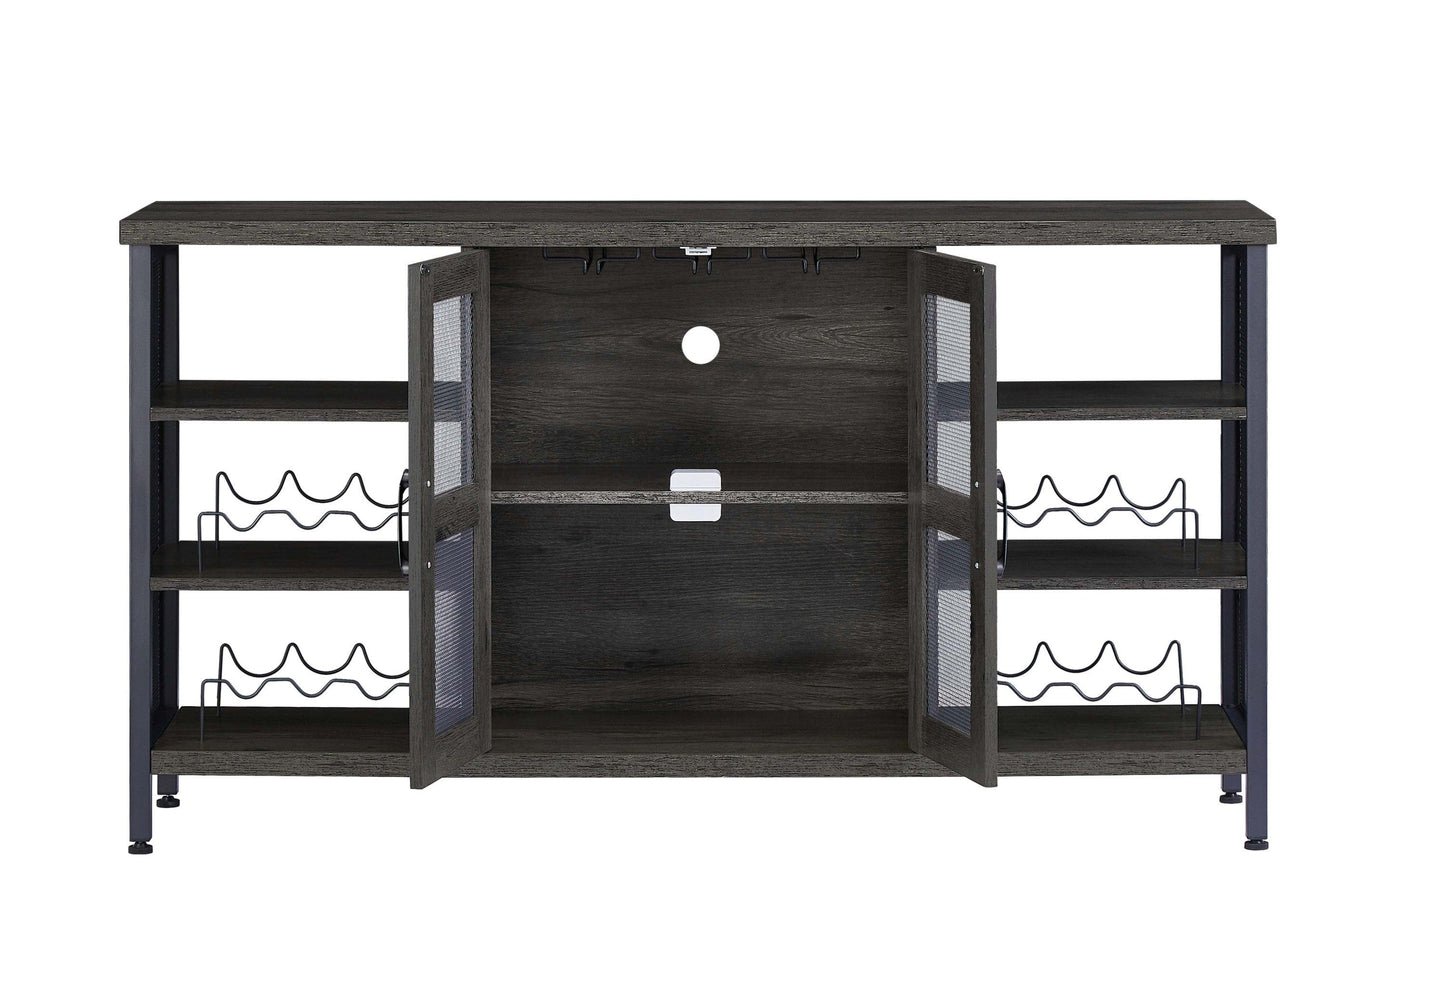 1st Choice Furniture Direct wine bar cabinet 1st Choice Industrial Wine Bar Cabinet and Wine Racks in Dark Grey